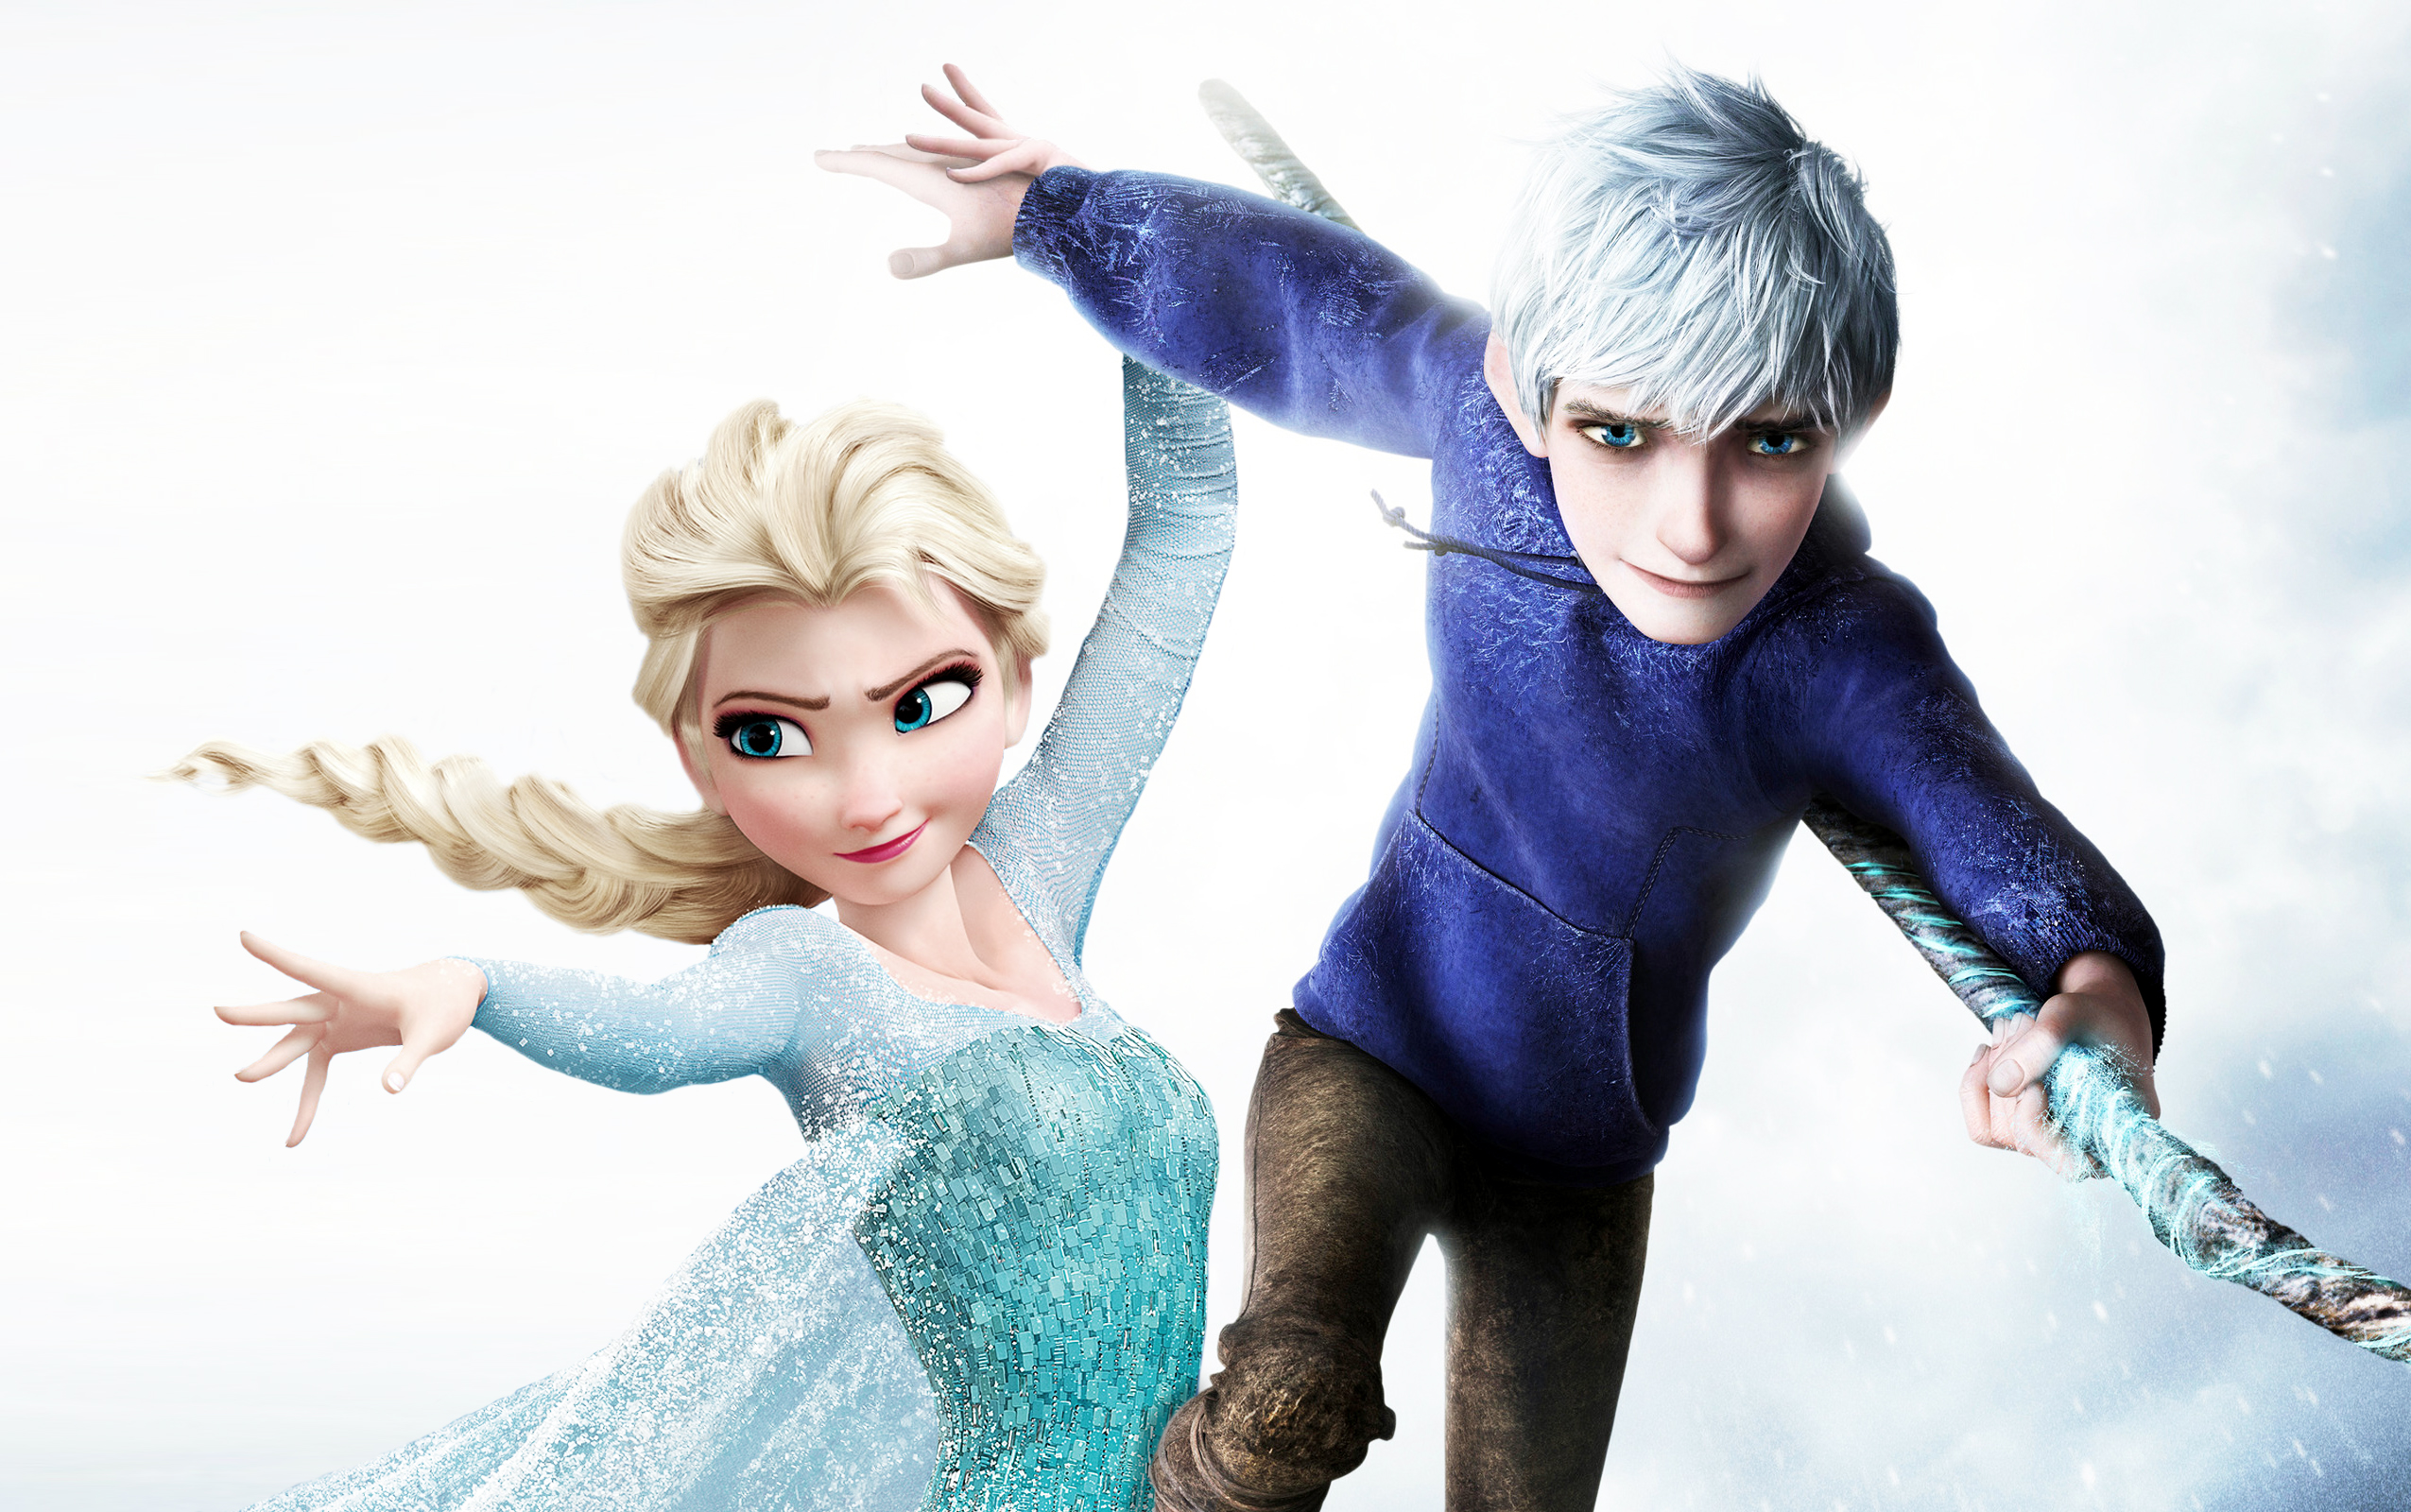 Elsa And Jack Frost By JonFArnold On DeviantArt